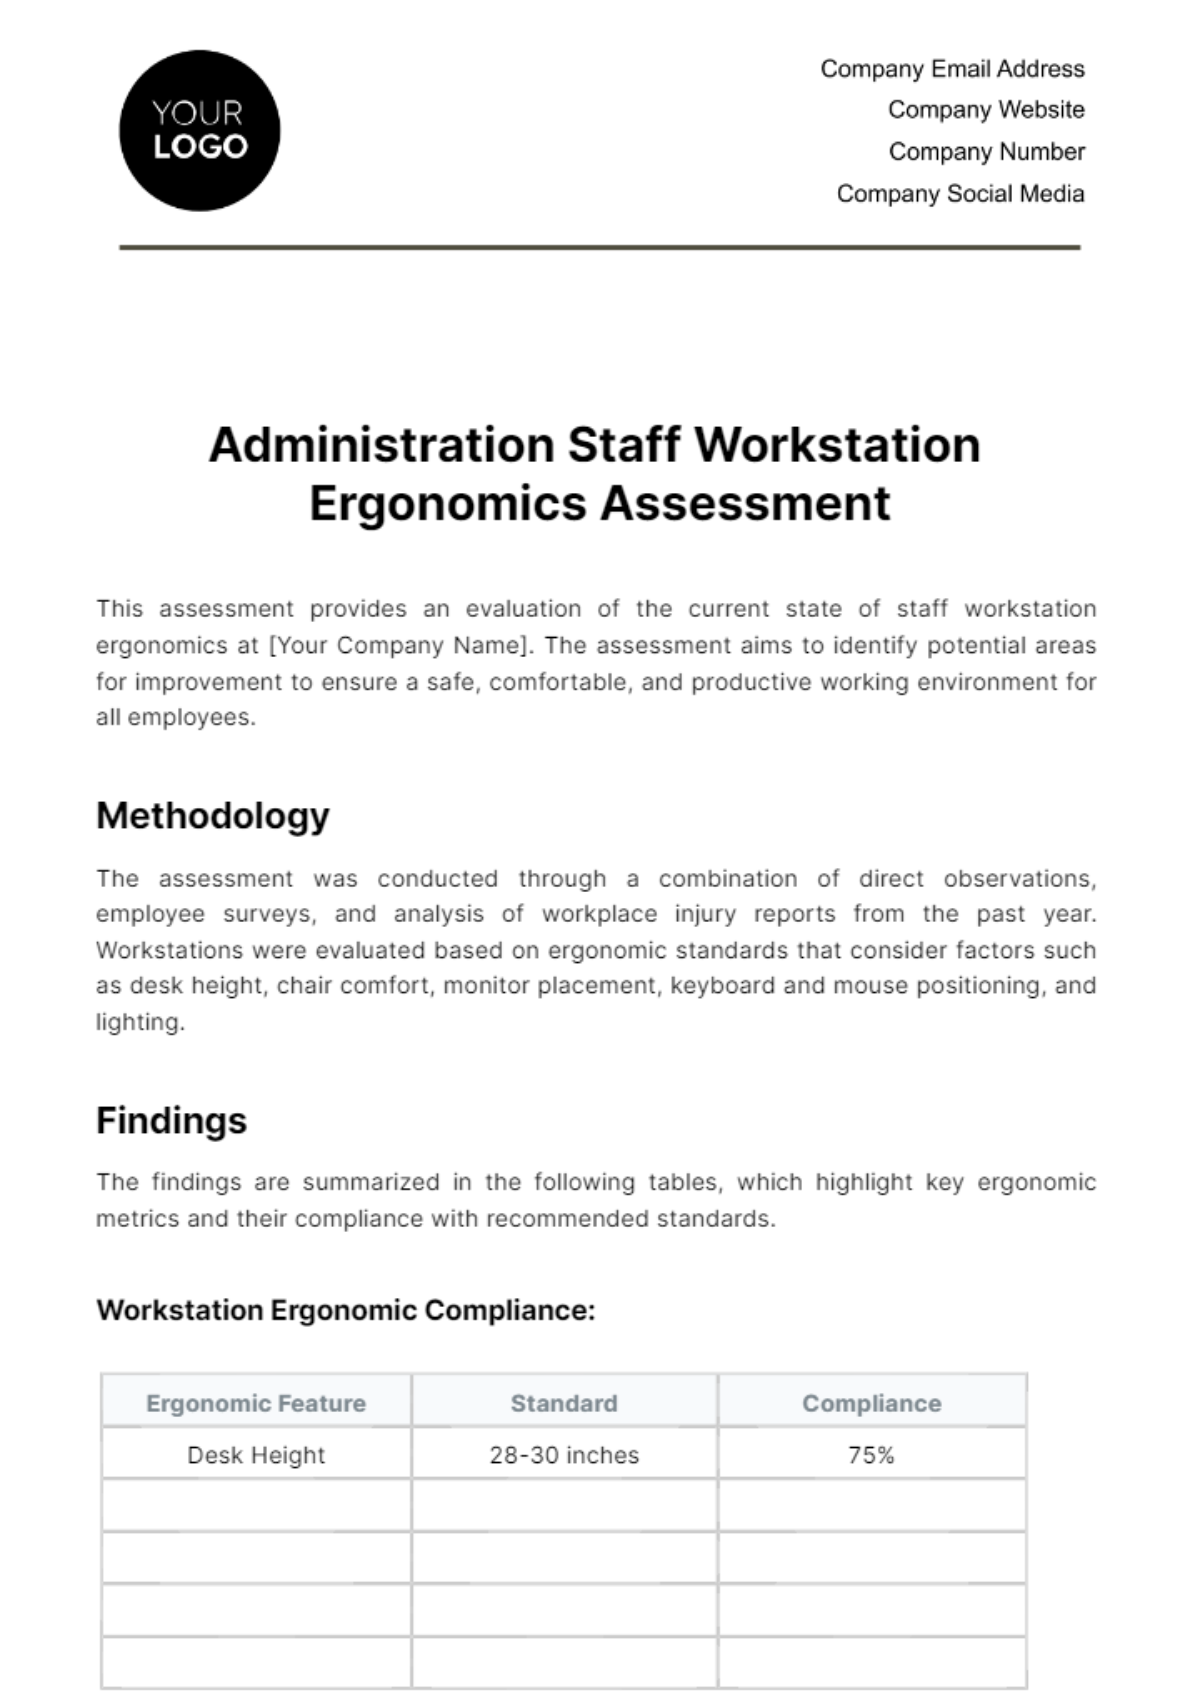 Free Administration Staff Workstation Ergonomics Assessment Template